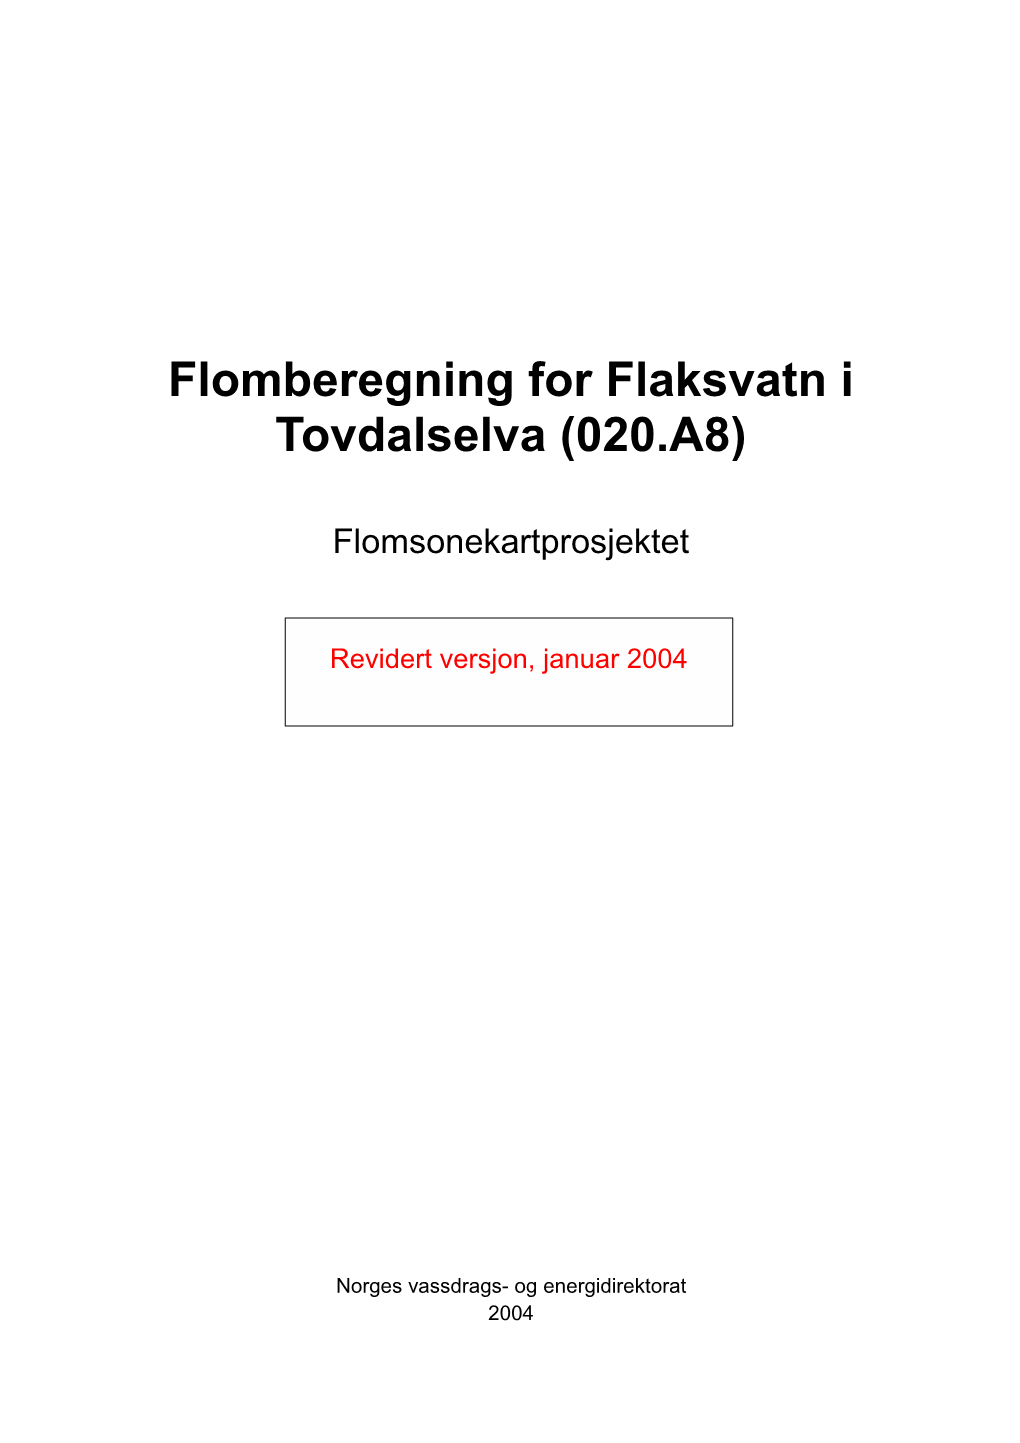 Flomberegning for Flaksvatn I Tovdalselva (020.A8)